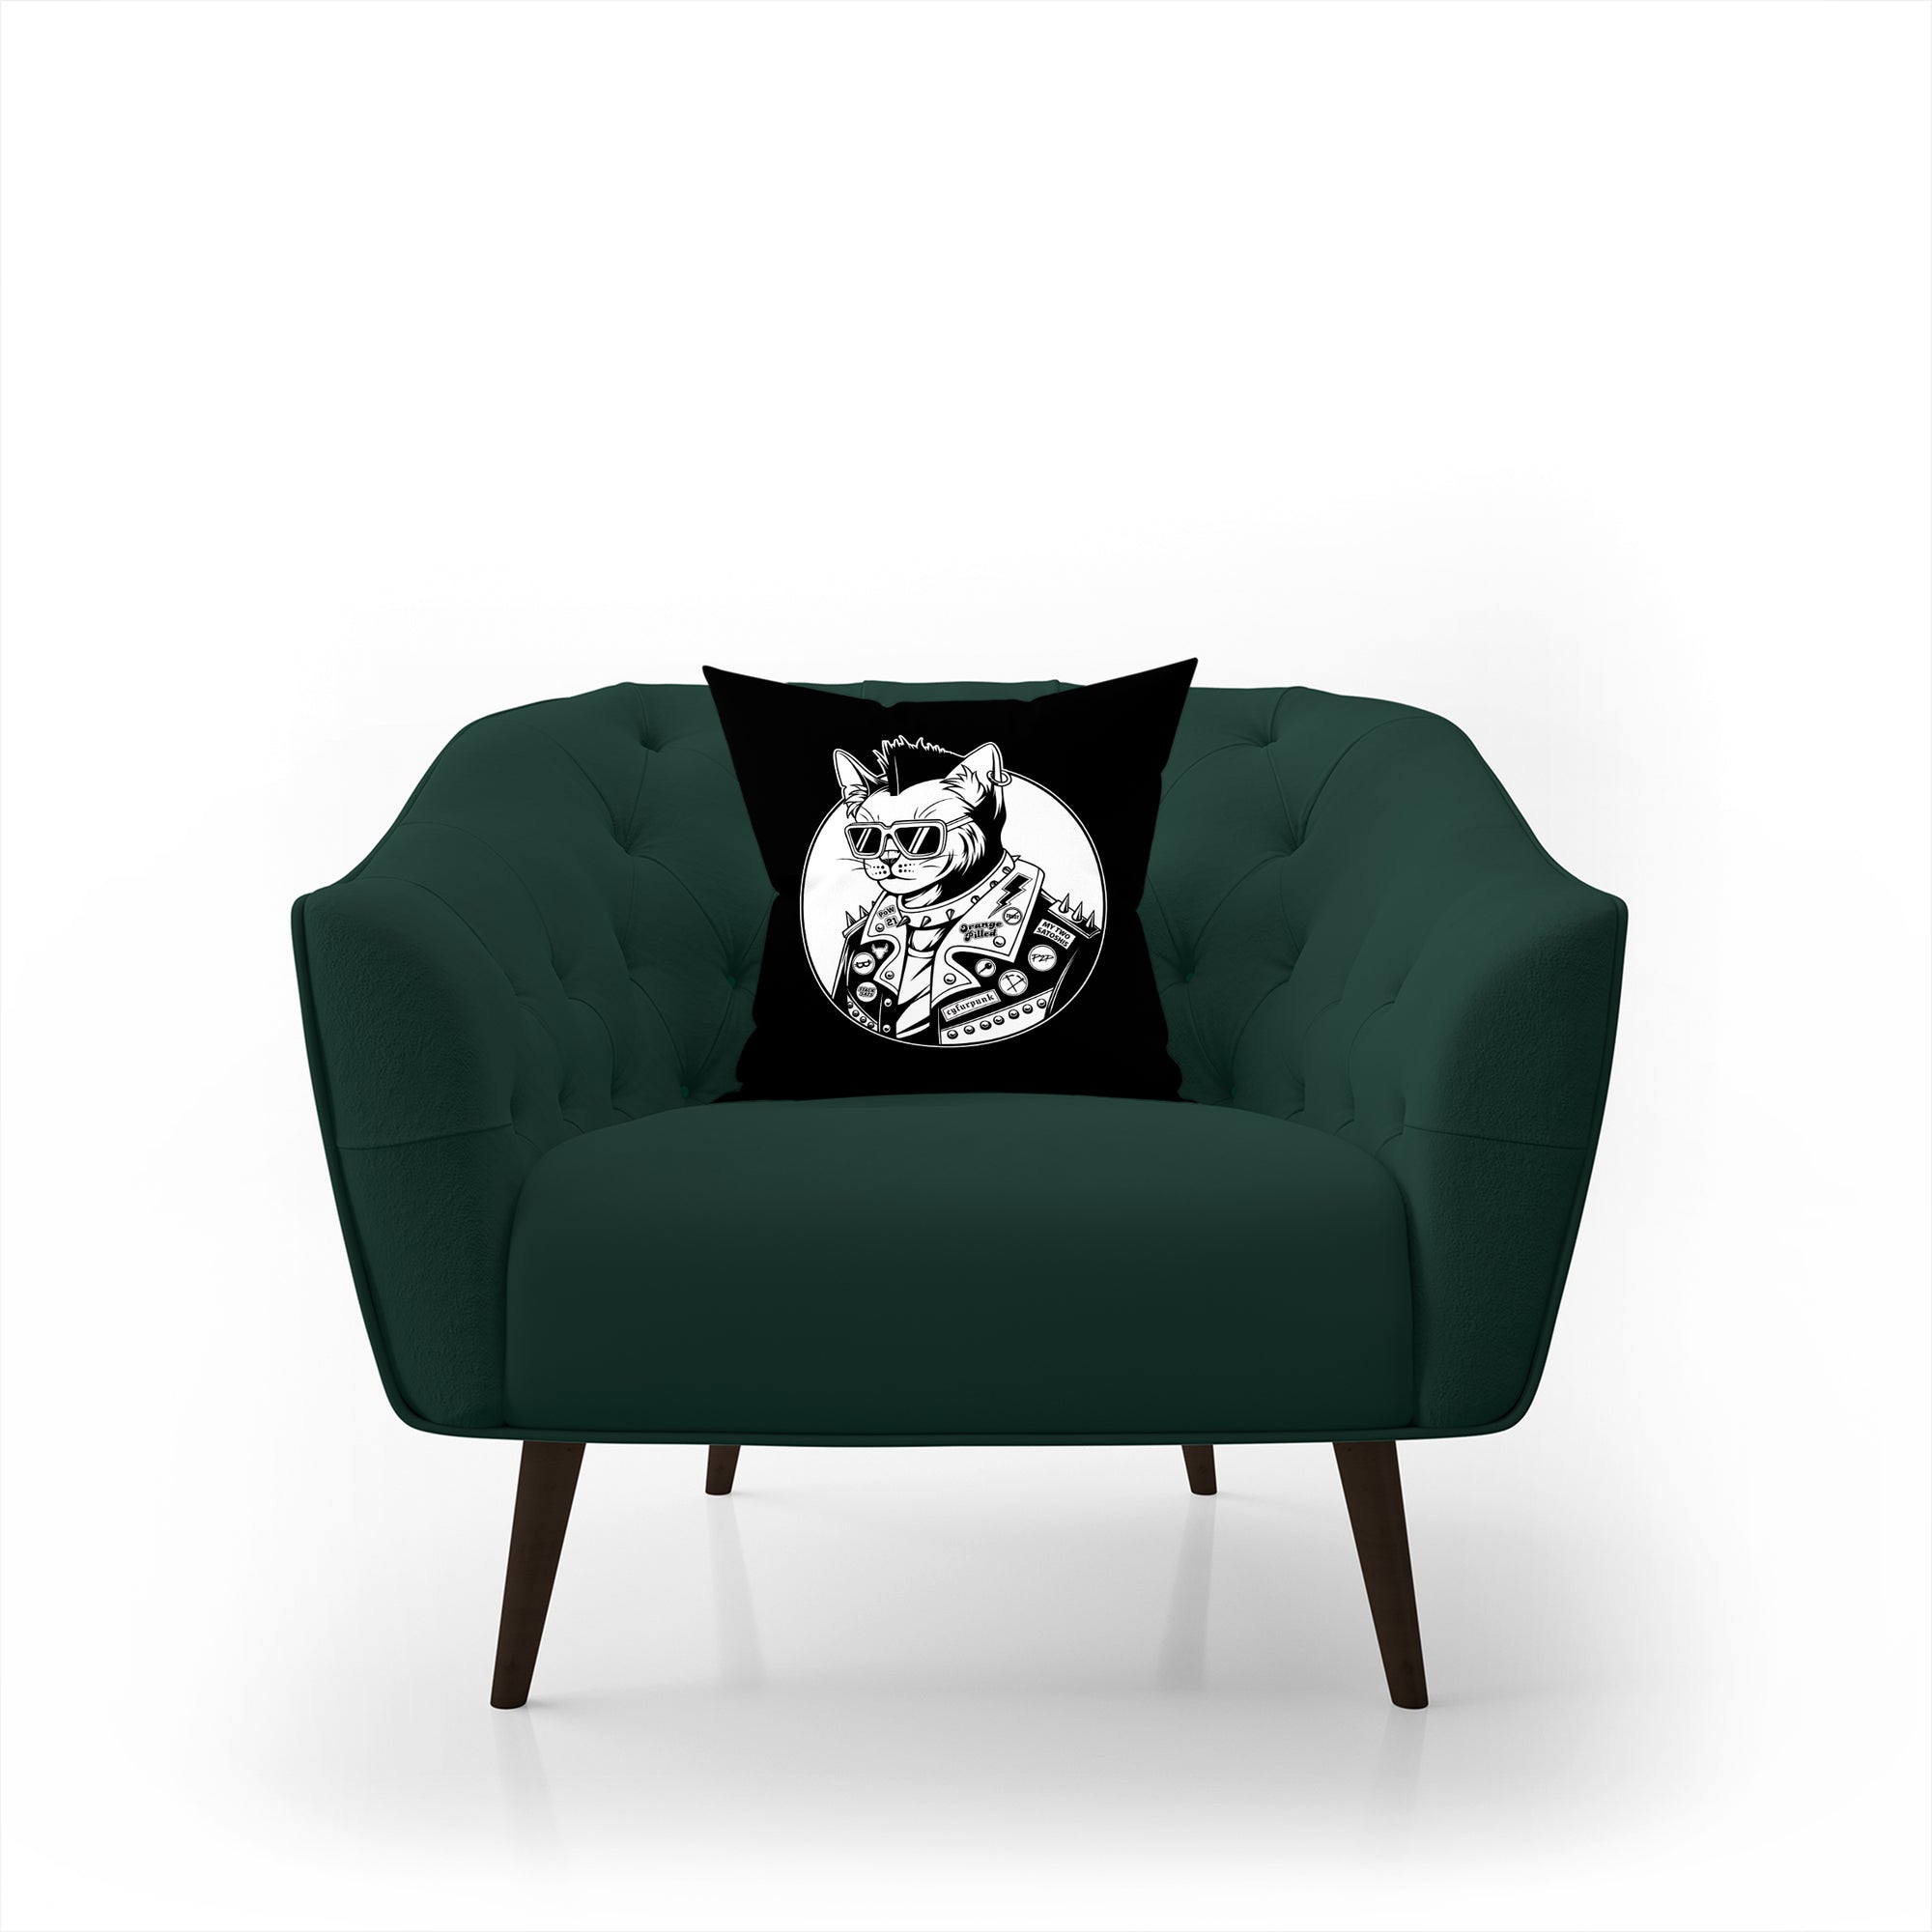 Bitcoin Merchandise - Bitcoin Cyfurpunk Pillow displayed on green armchair. 